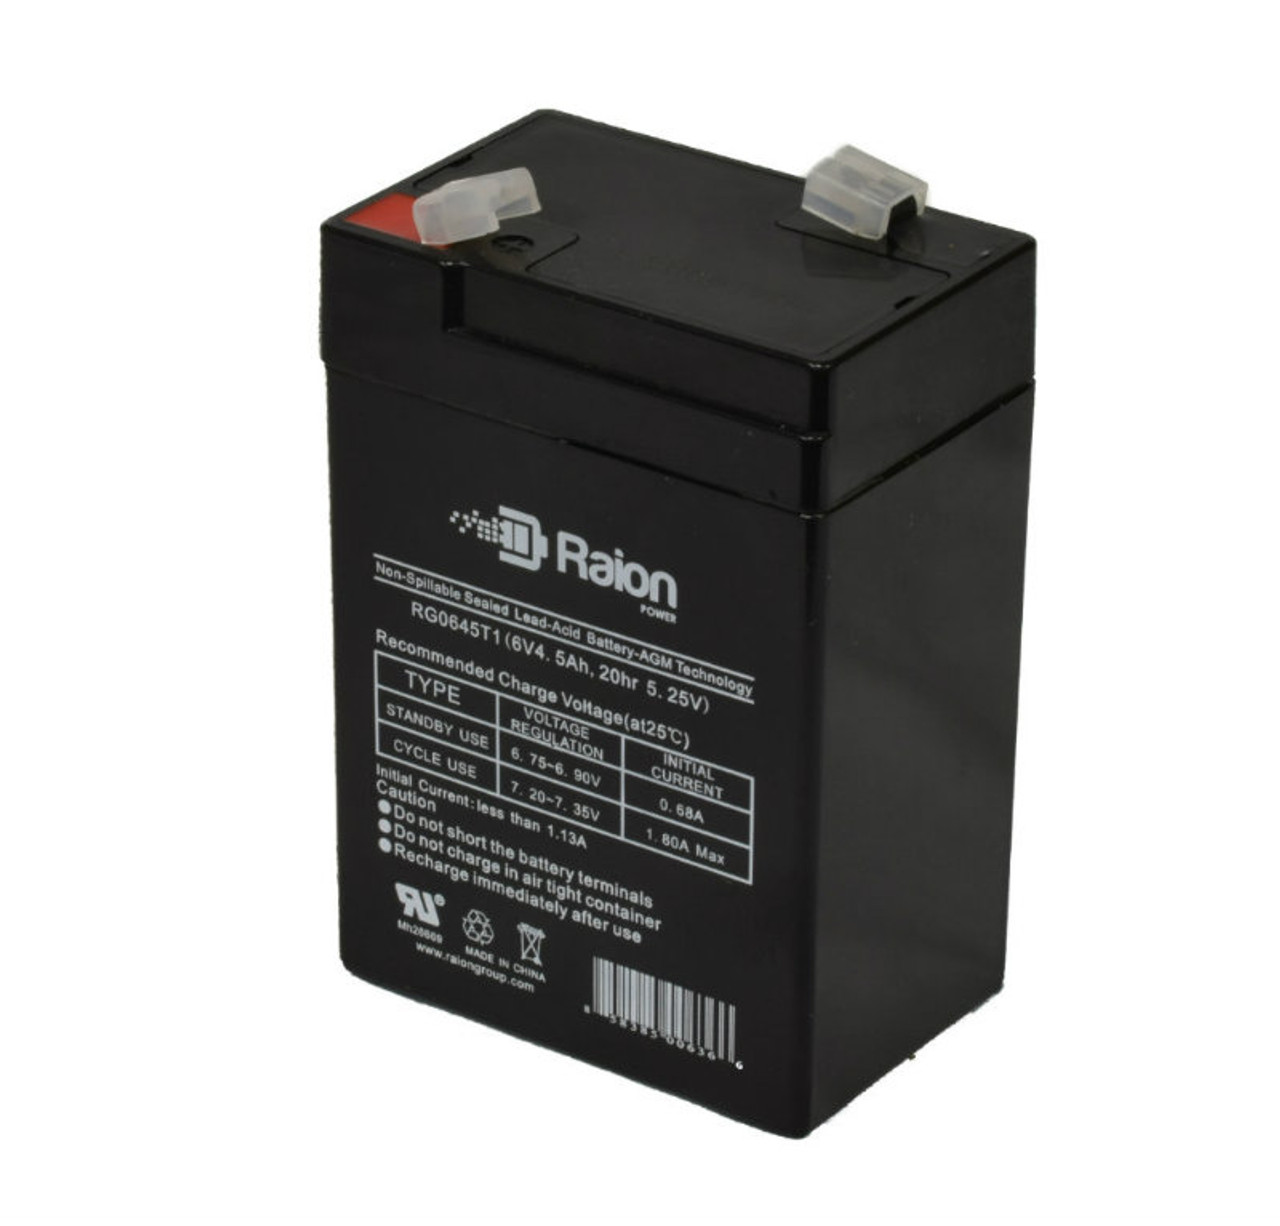 Raion Power RG0645T1 6V 4.5Ah Replacement Battery Cartridge for Tork 331-D